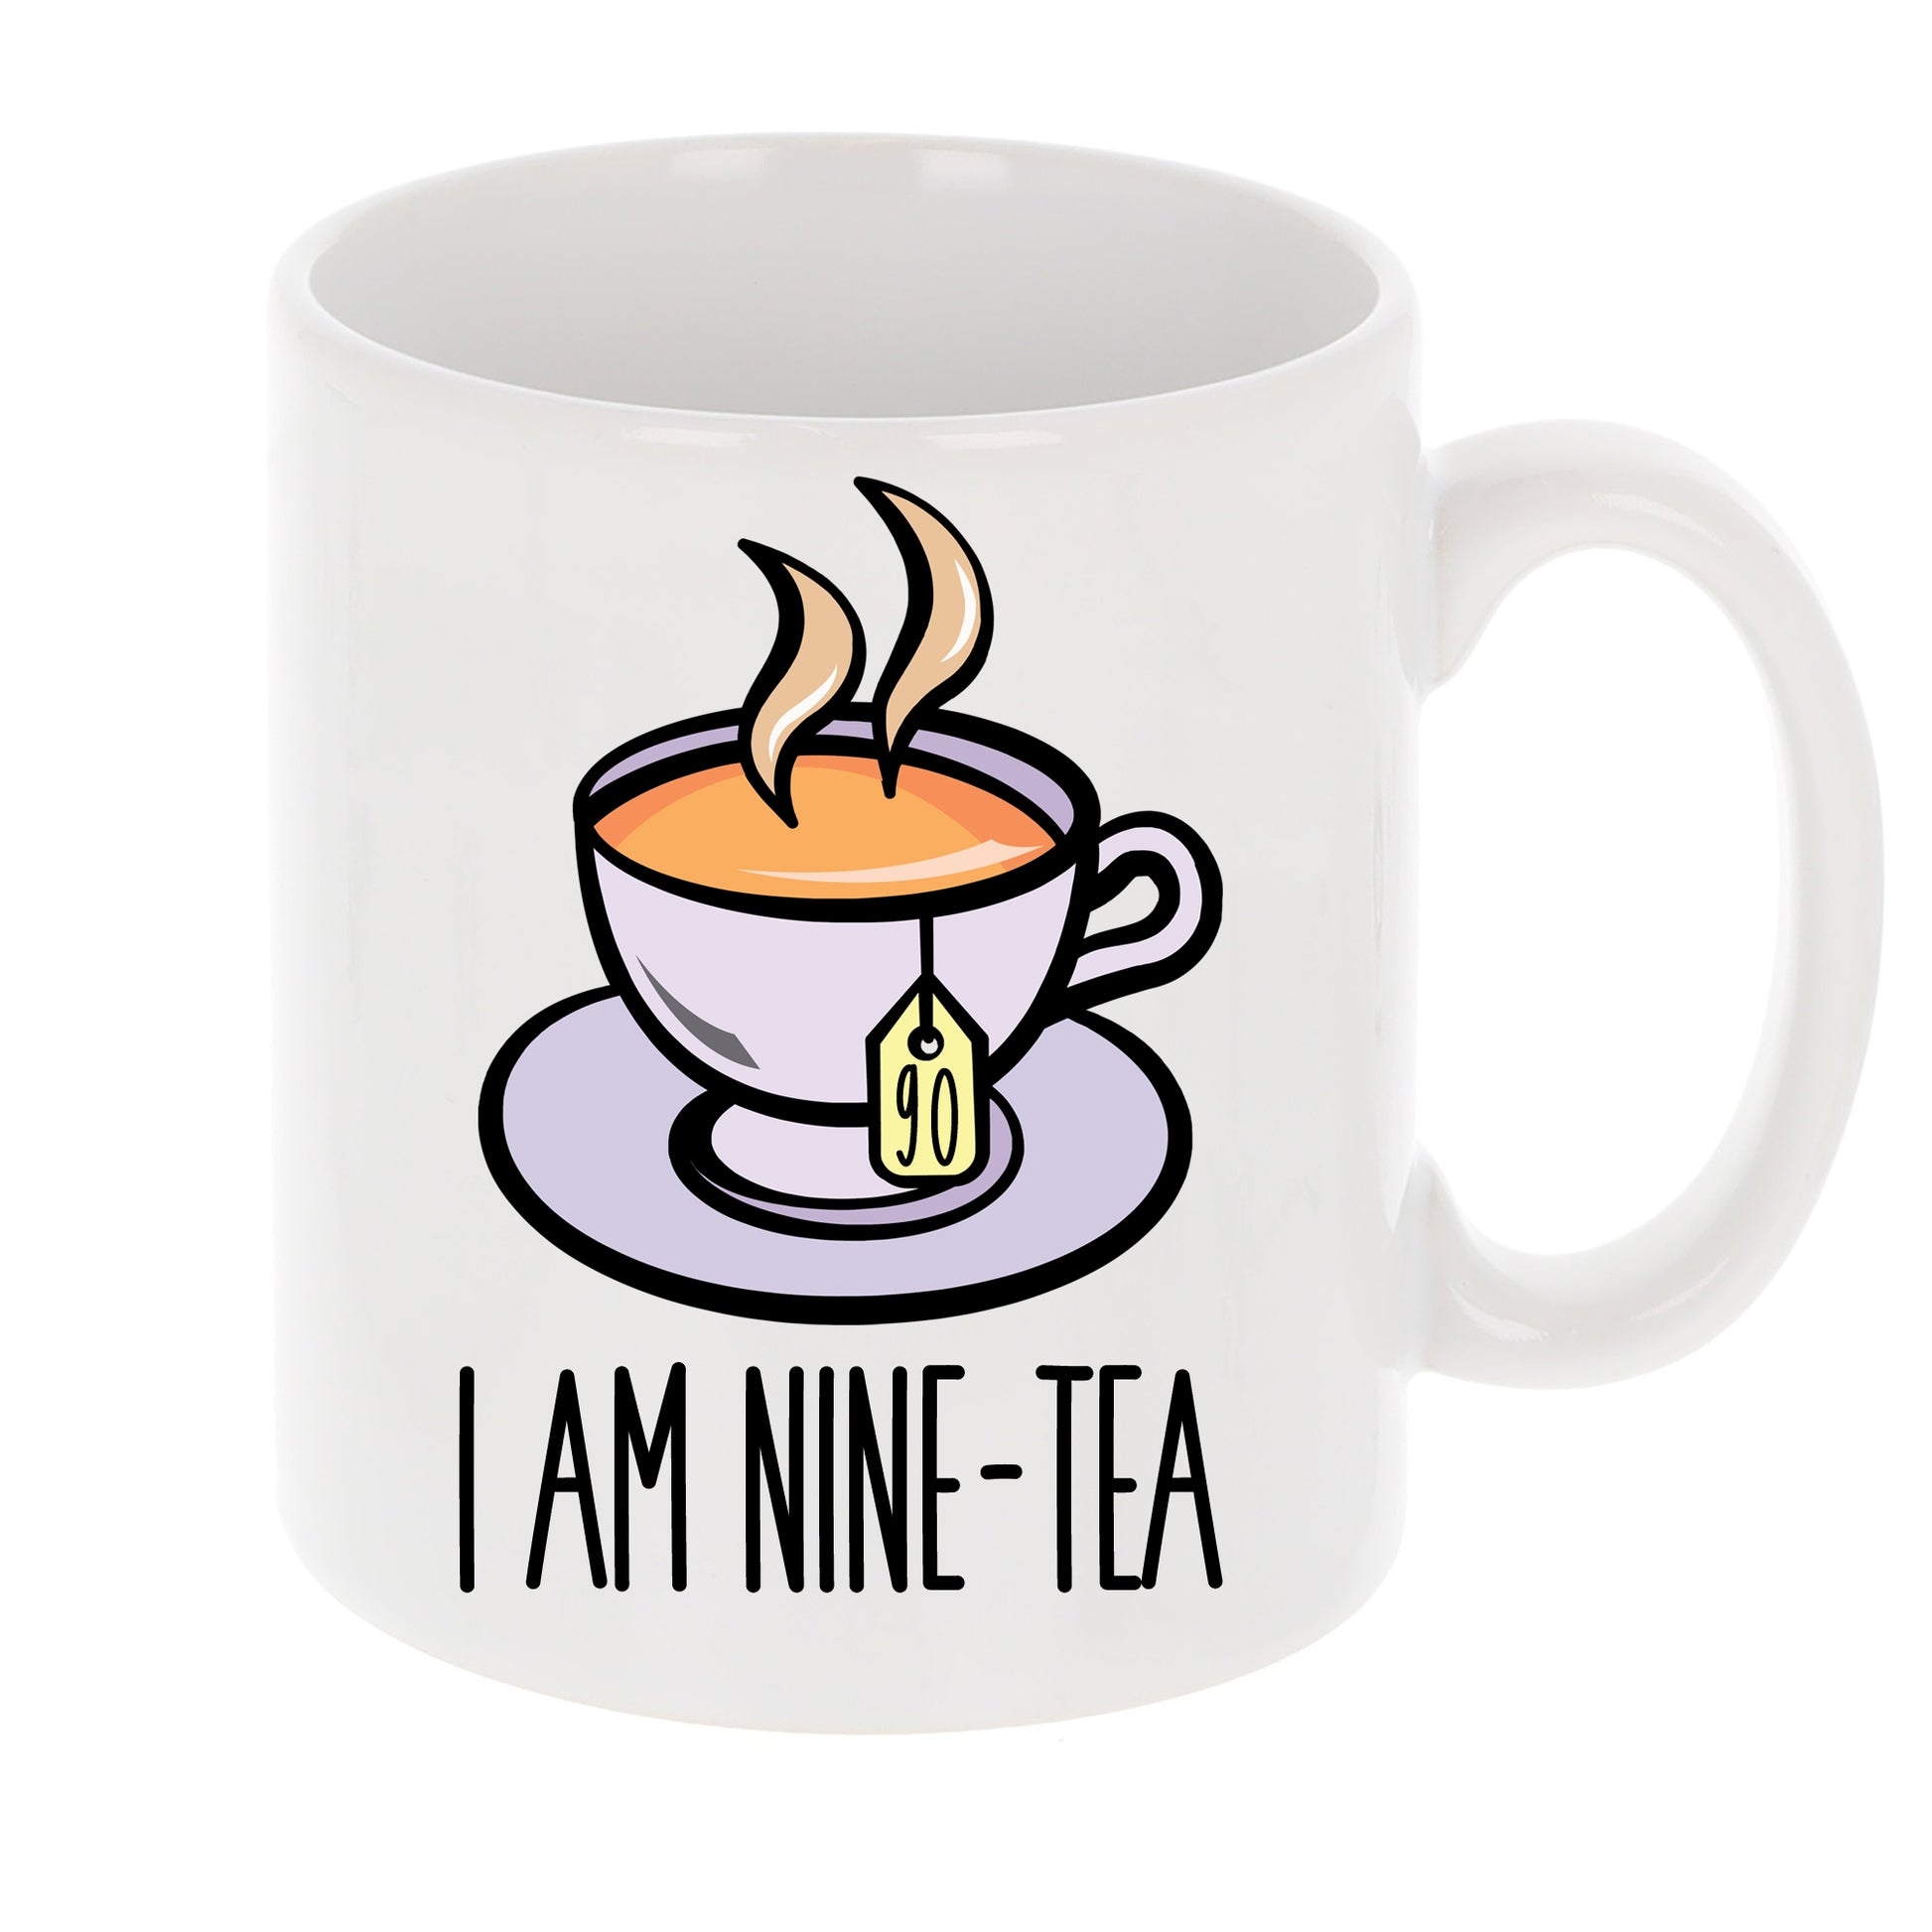 I Am Nine-Tea Funny 90th Birthday Mug Gift for Tea Lovers  - Always Looking Good - Mug Only  